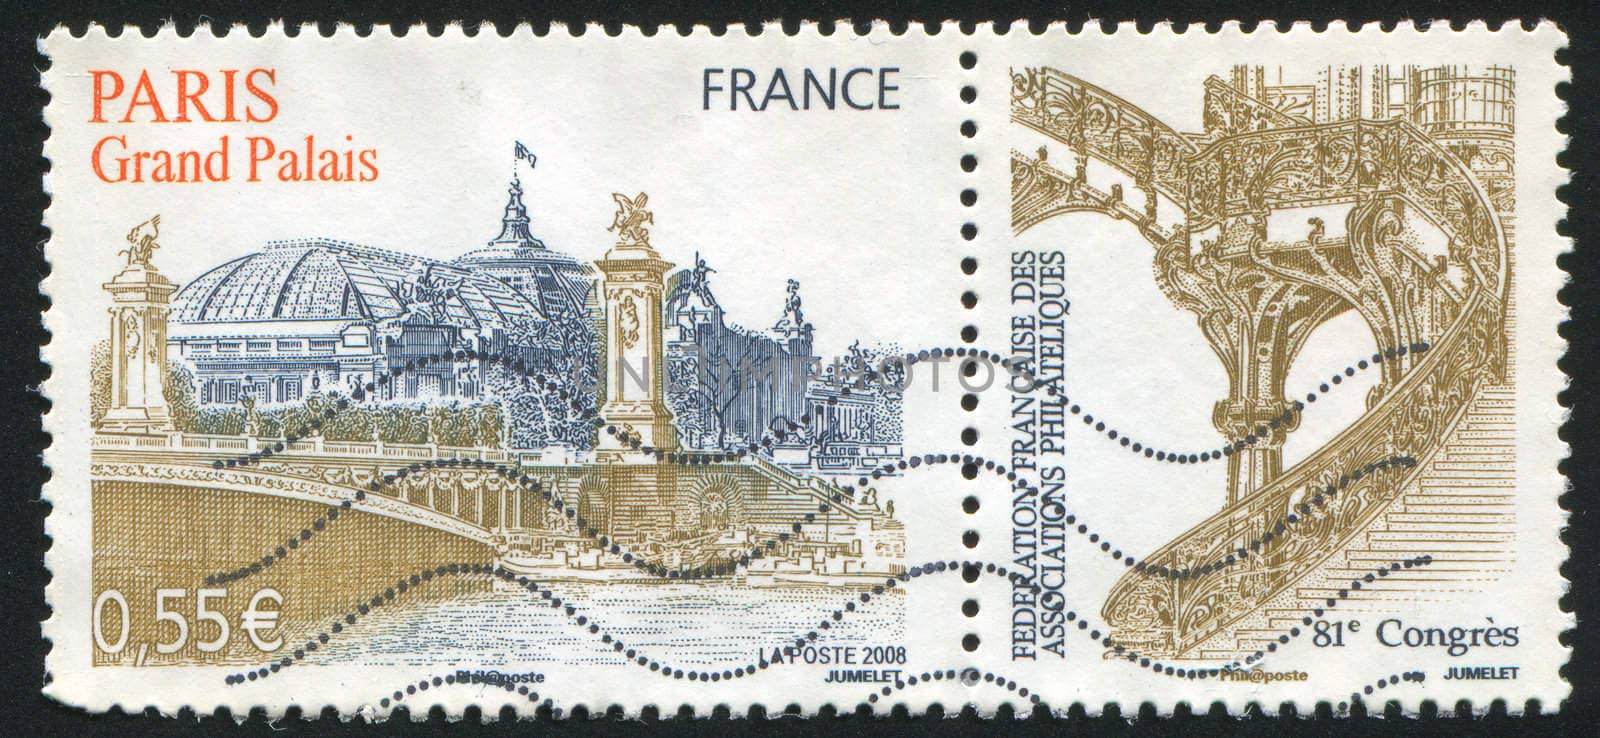 FRANCE - CIRCA 2008: stamp printed by France, shows Grand Palais - Paris, circa 2008